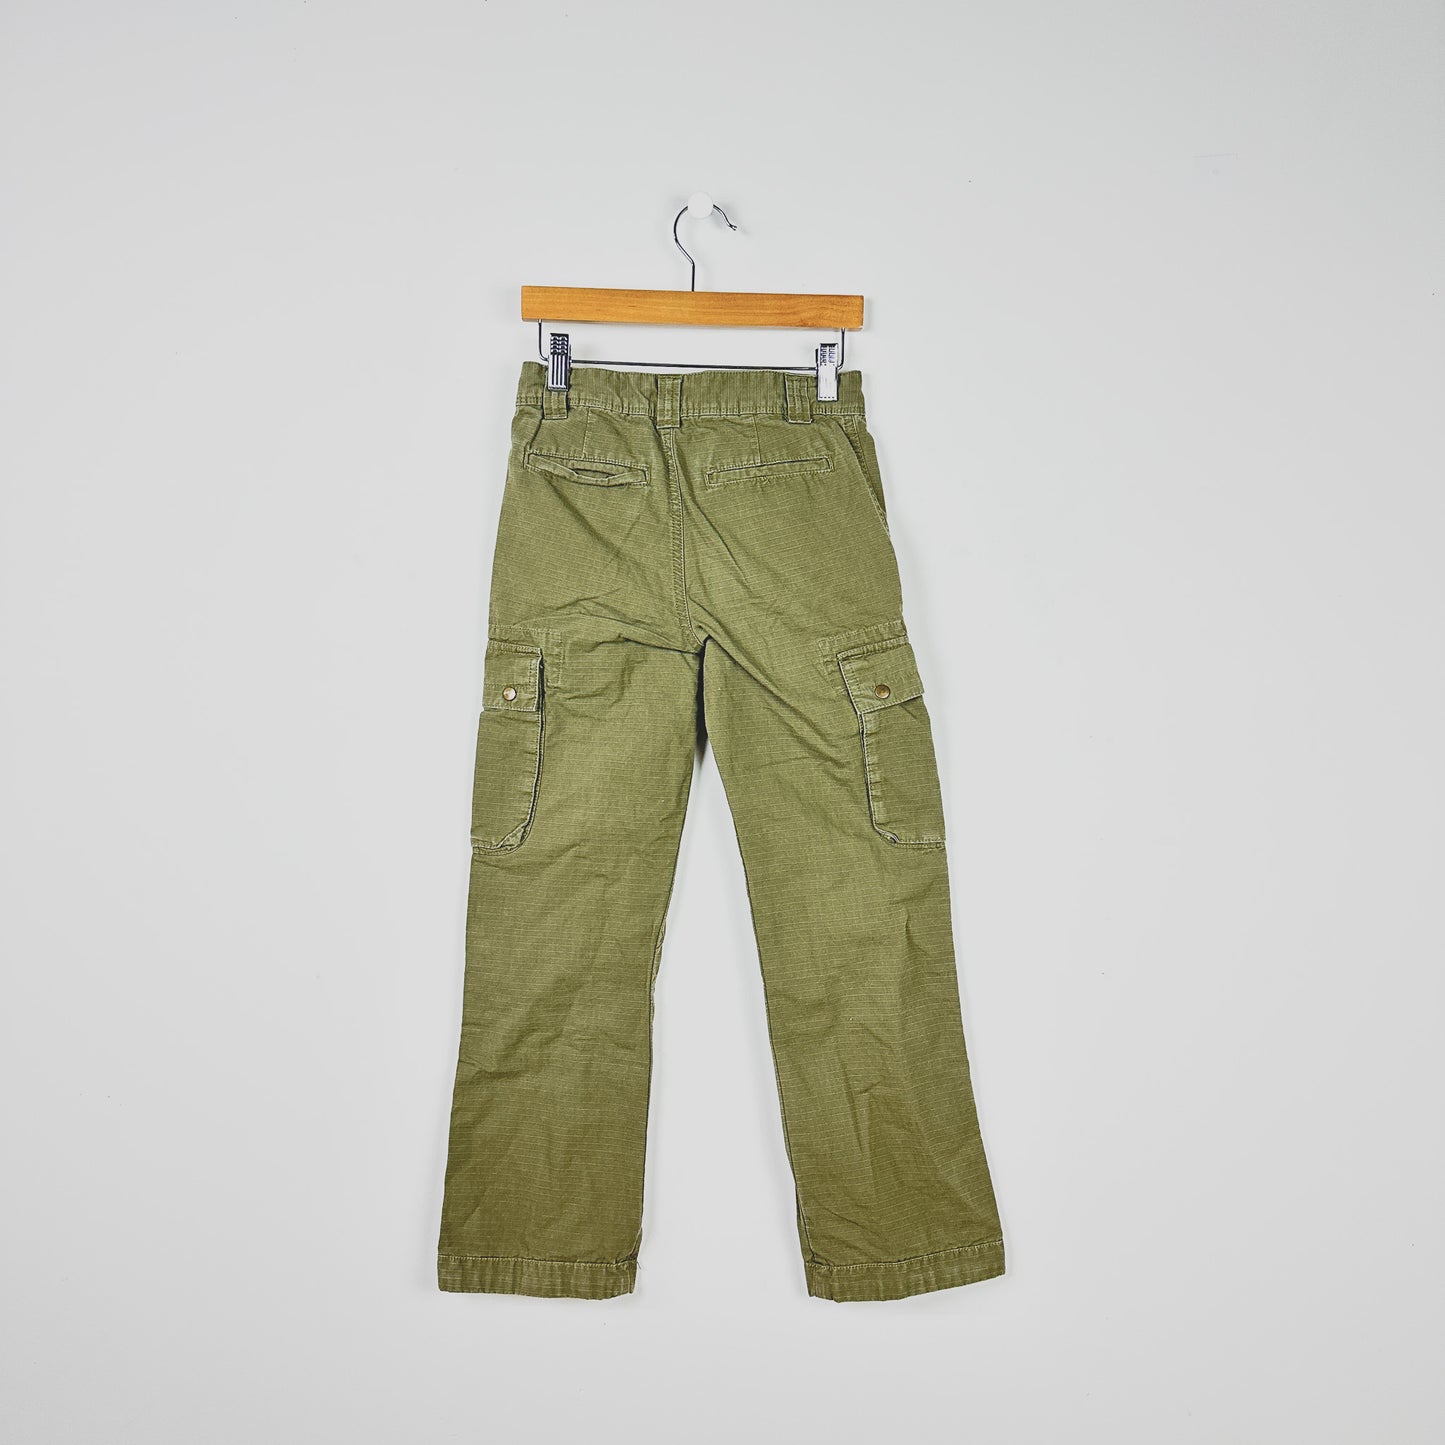 Vintage POLO Rip-Stop Cargo Pants - Size 8yr